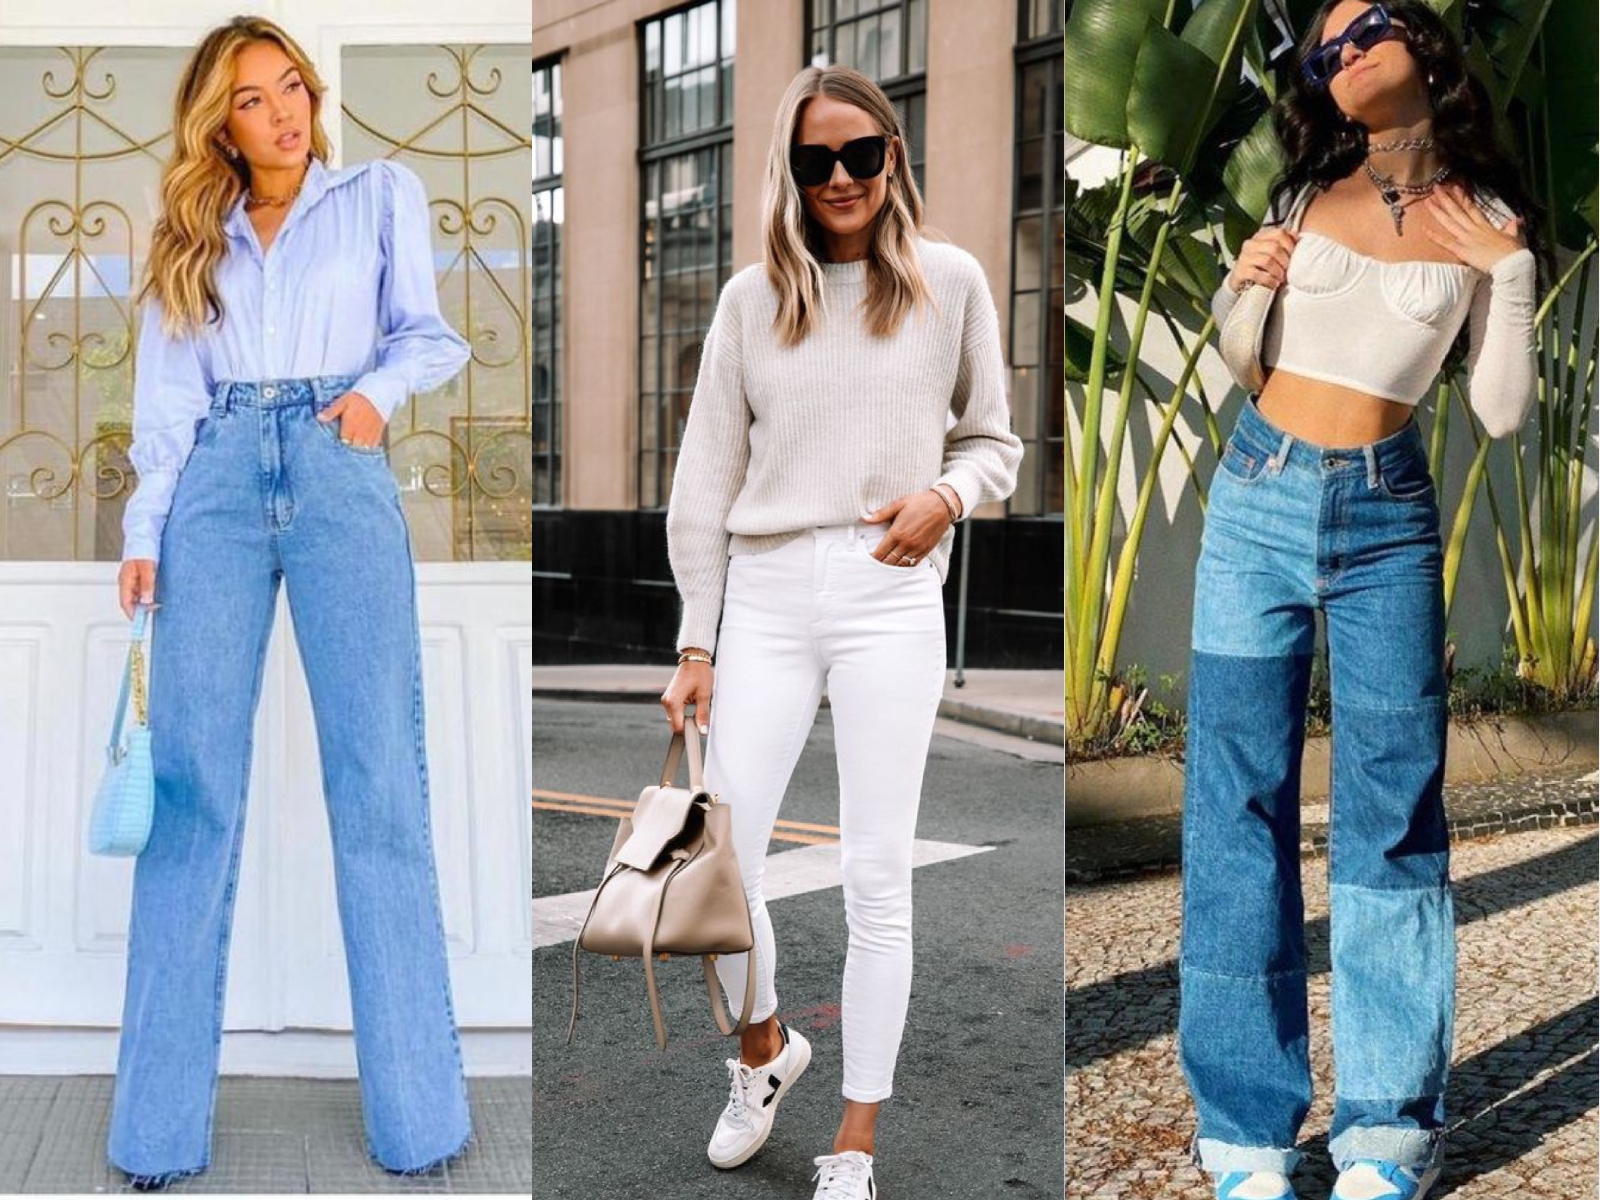 2019 Latest Fashion Boys Trousers Skinny Pants Ripped Denim Jeans Men Jeans  KsD015  China Denim and Jeans price  MadeinChinacom